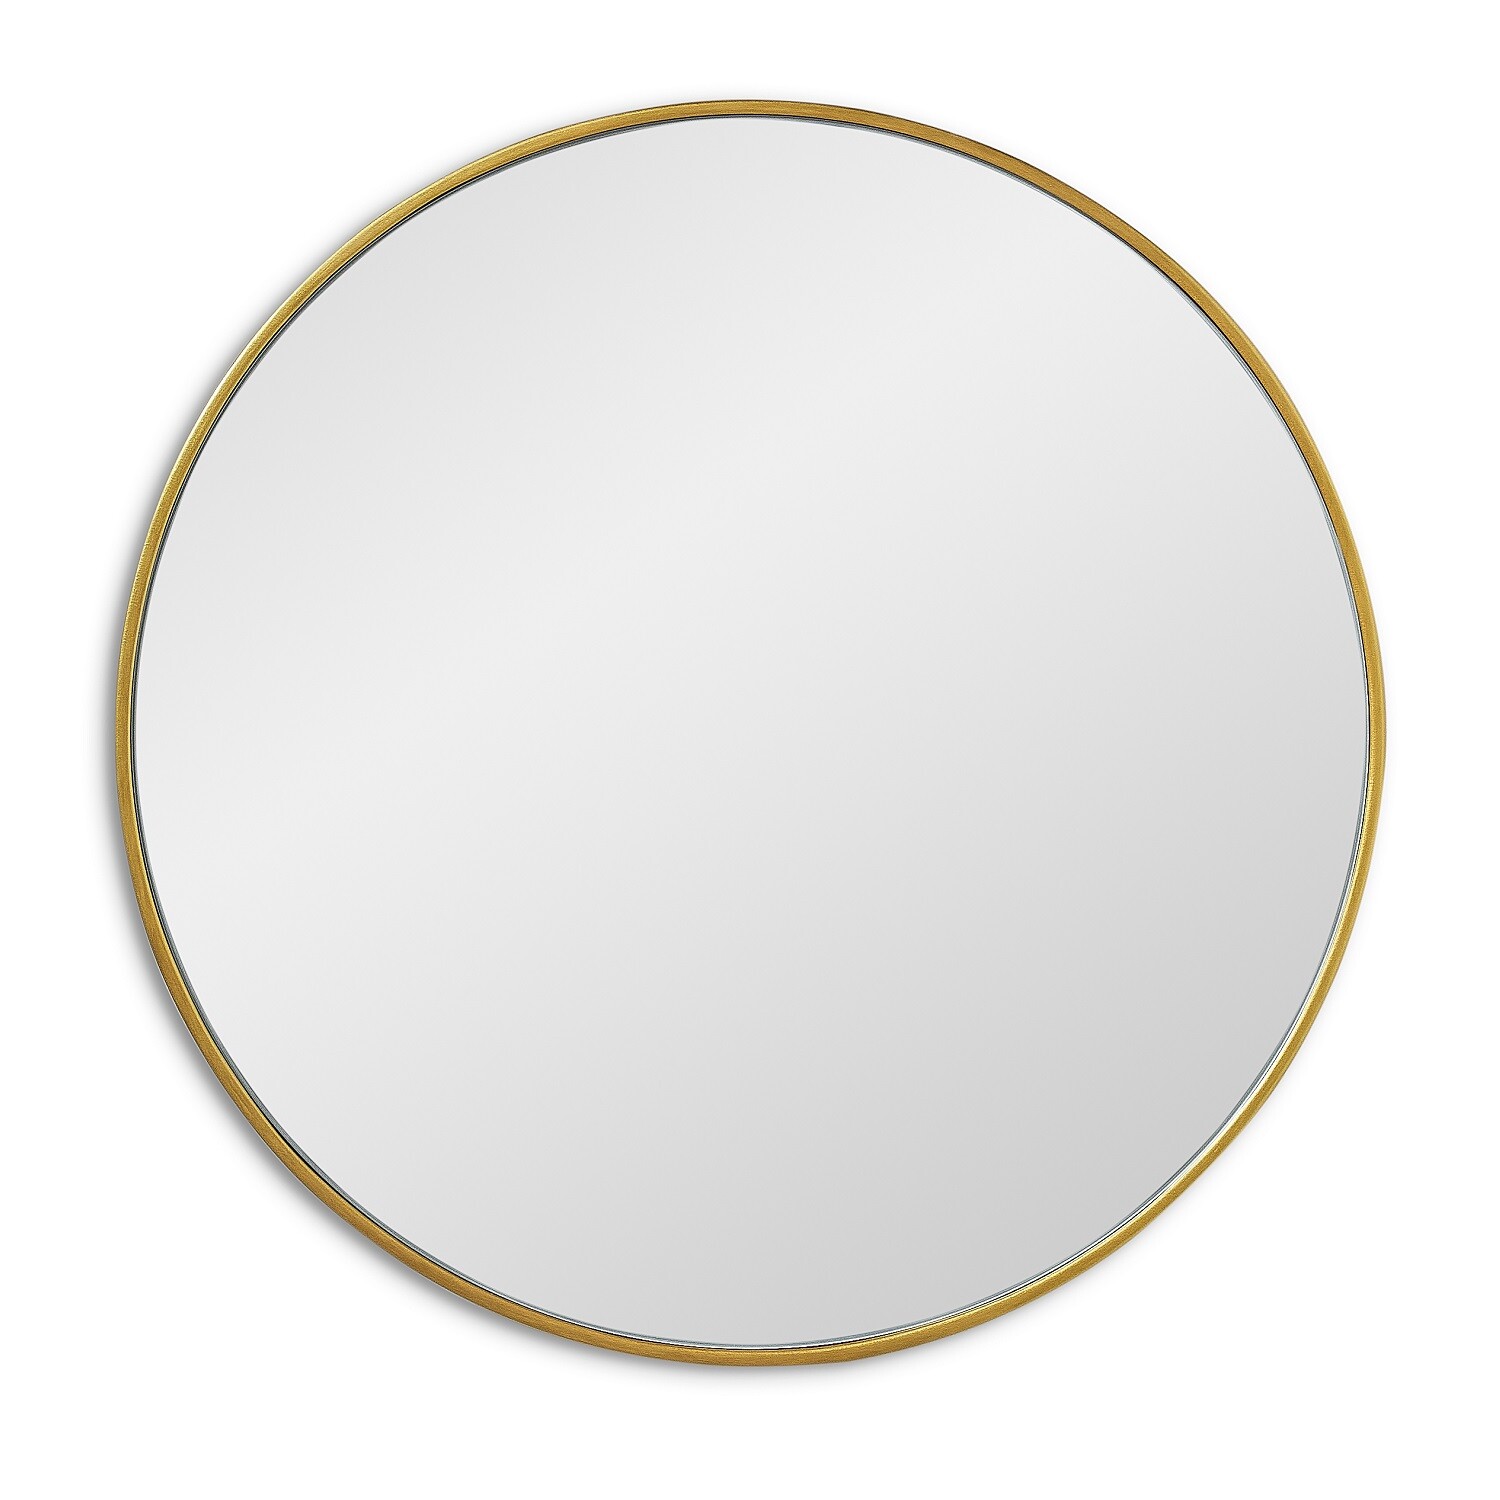 Круглое зеркало в тонкой раме 55 см золото Ala S Gold Smal